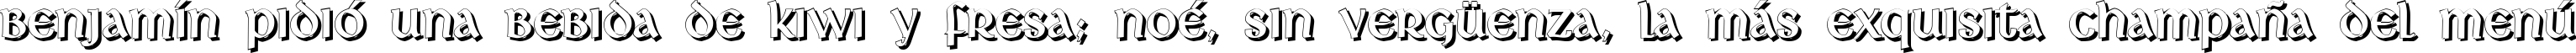 Пример написания шрифтом Deutsche Uncialis Shadow текста на испанском